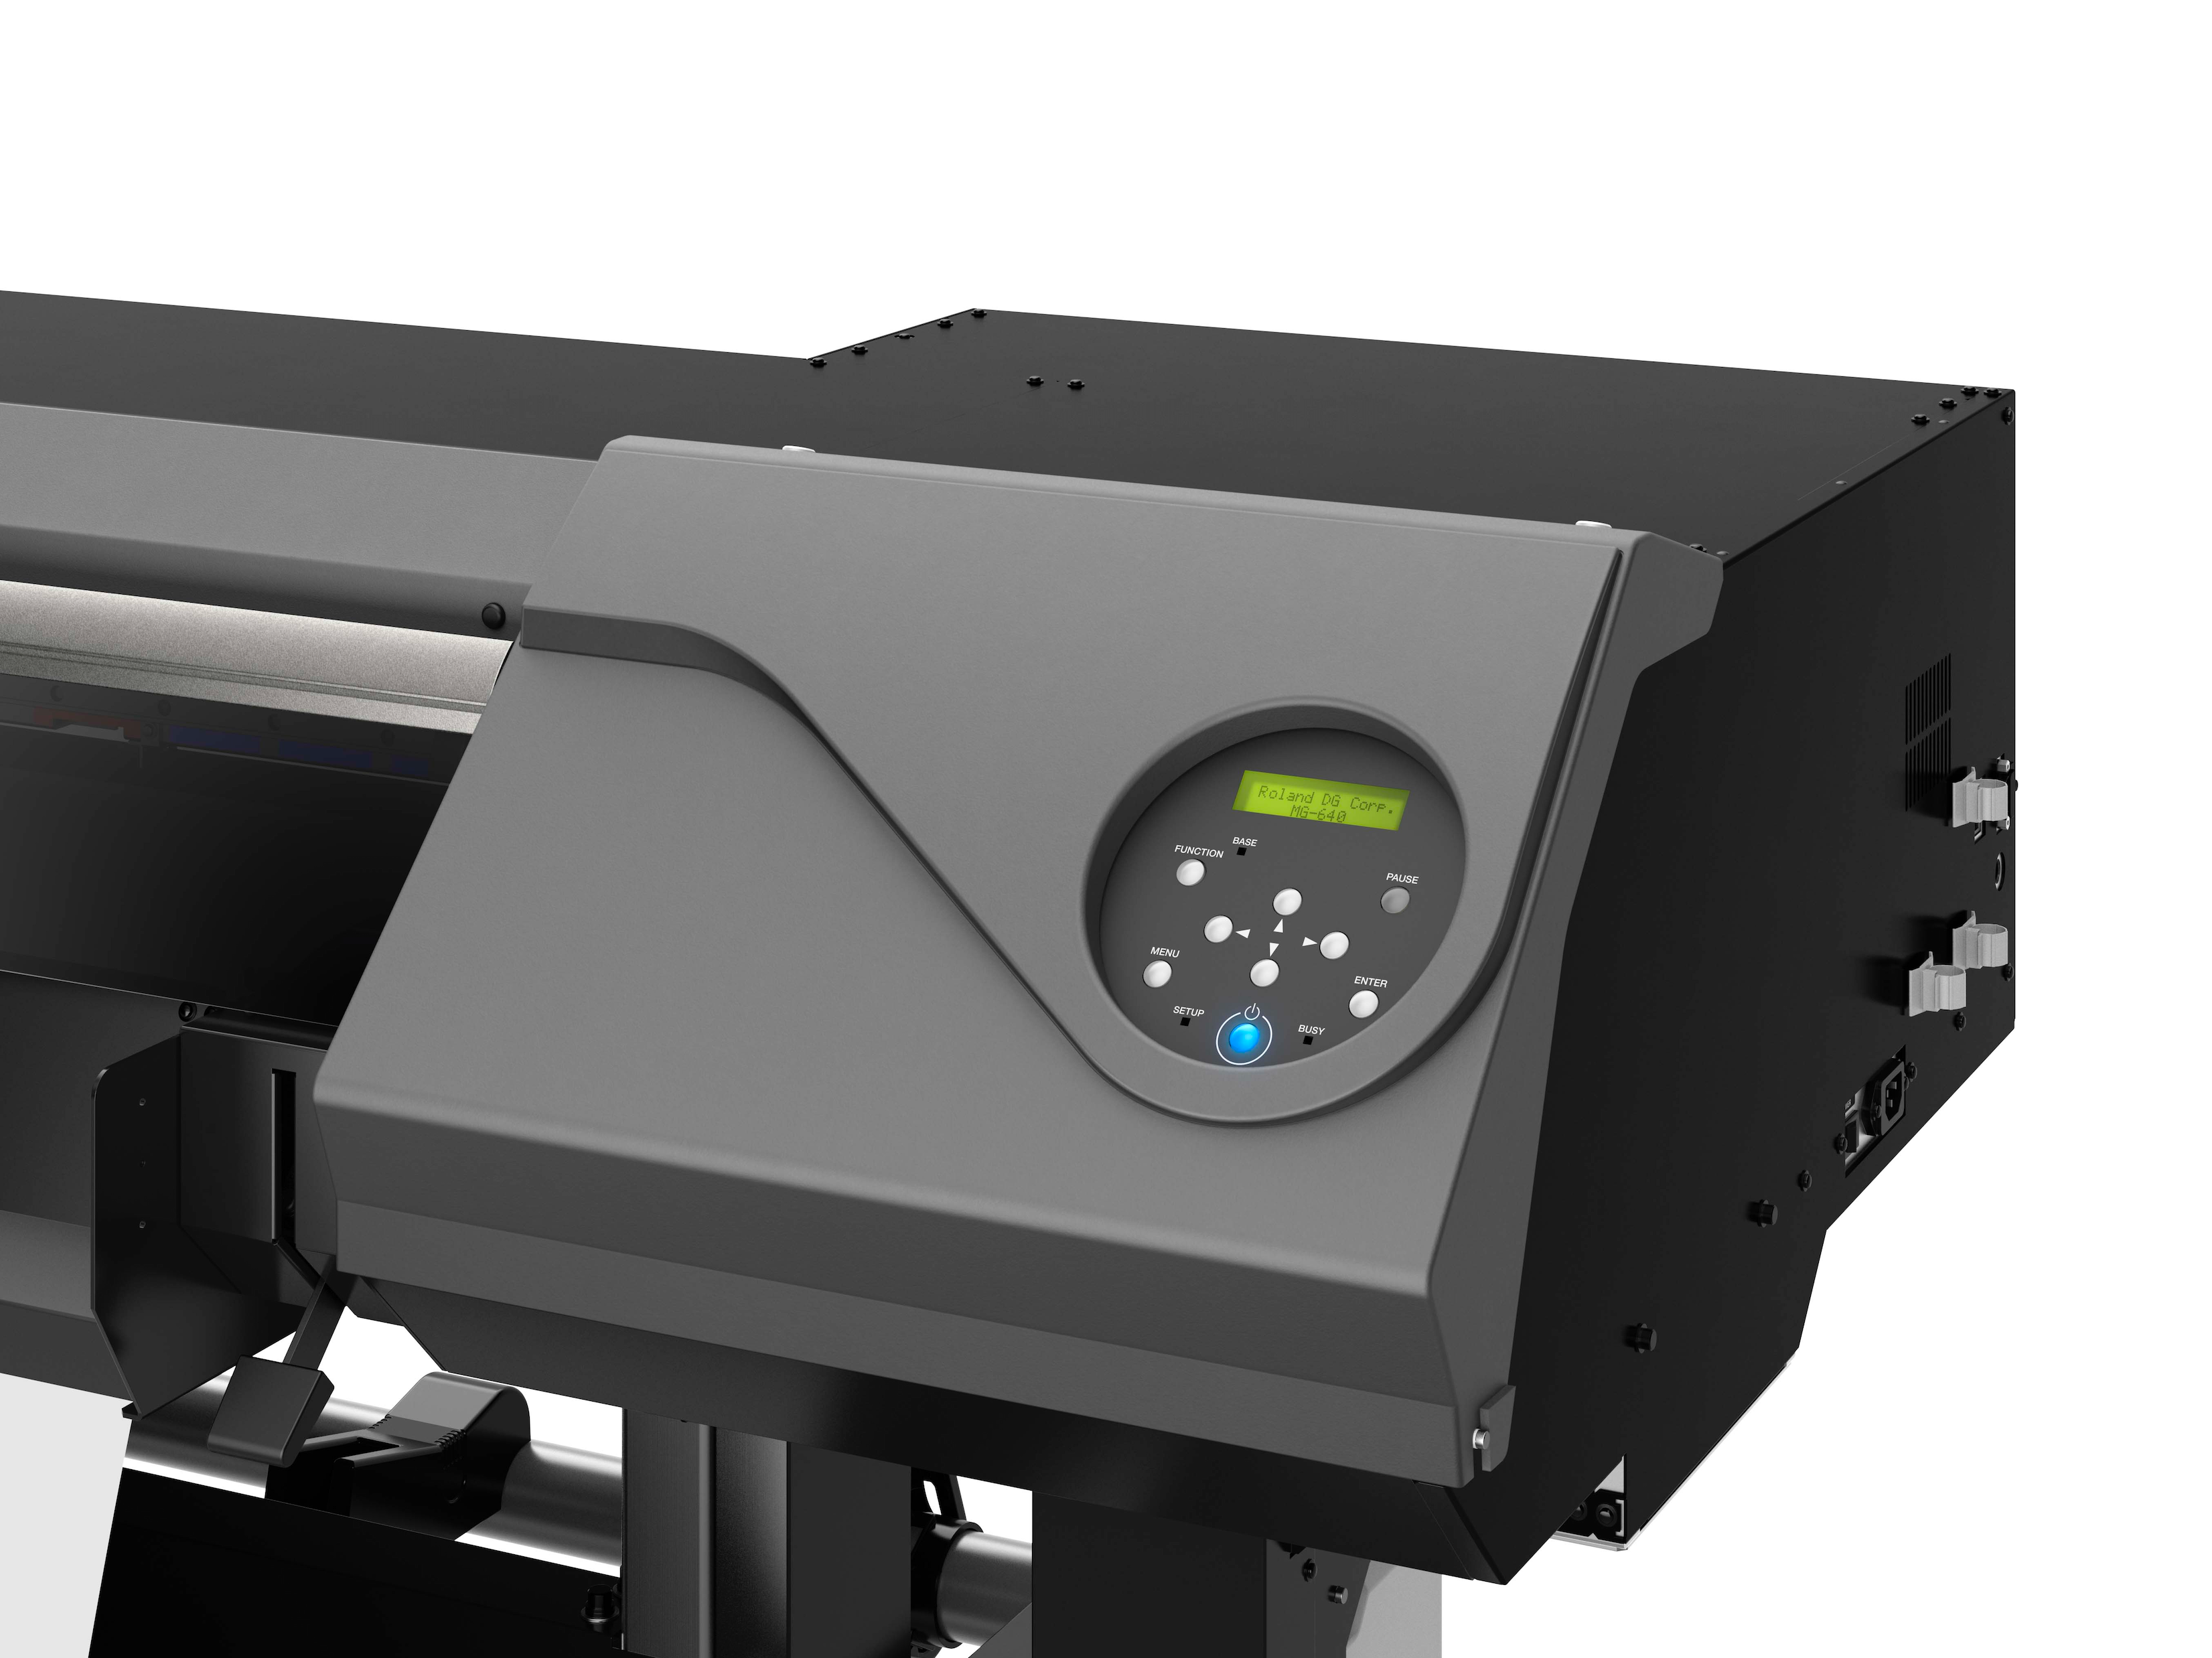 Roland TrueVIS MG-640 UV Printer/Cutter